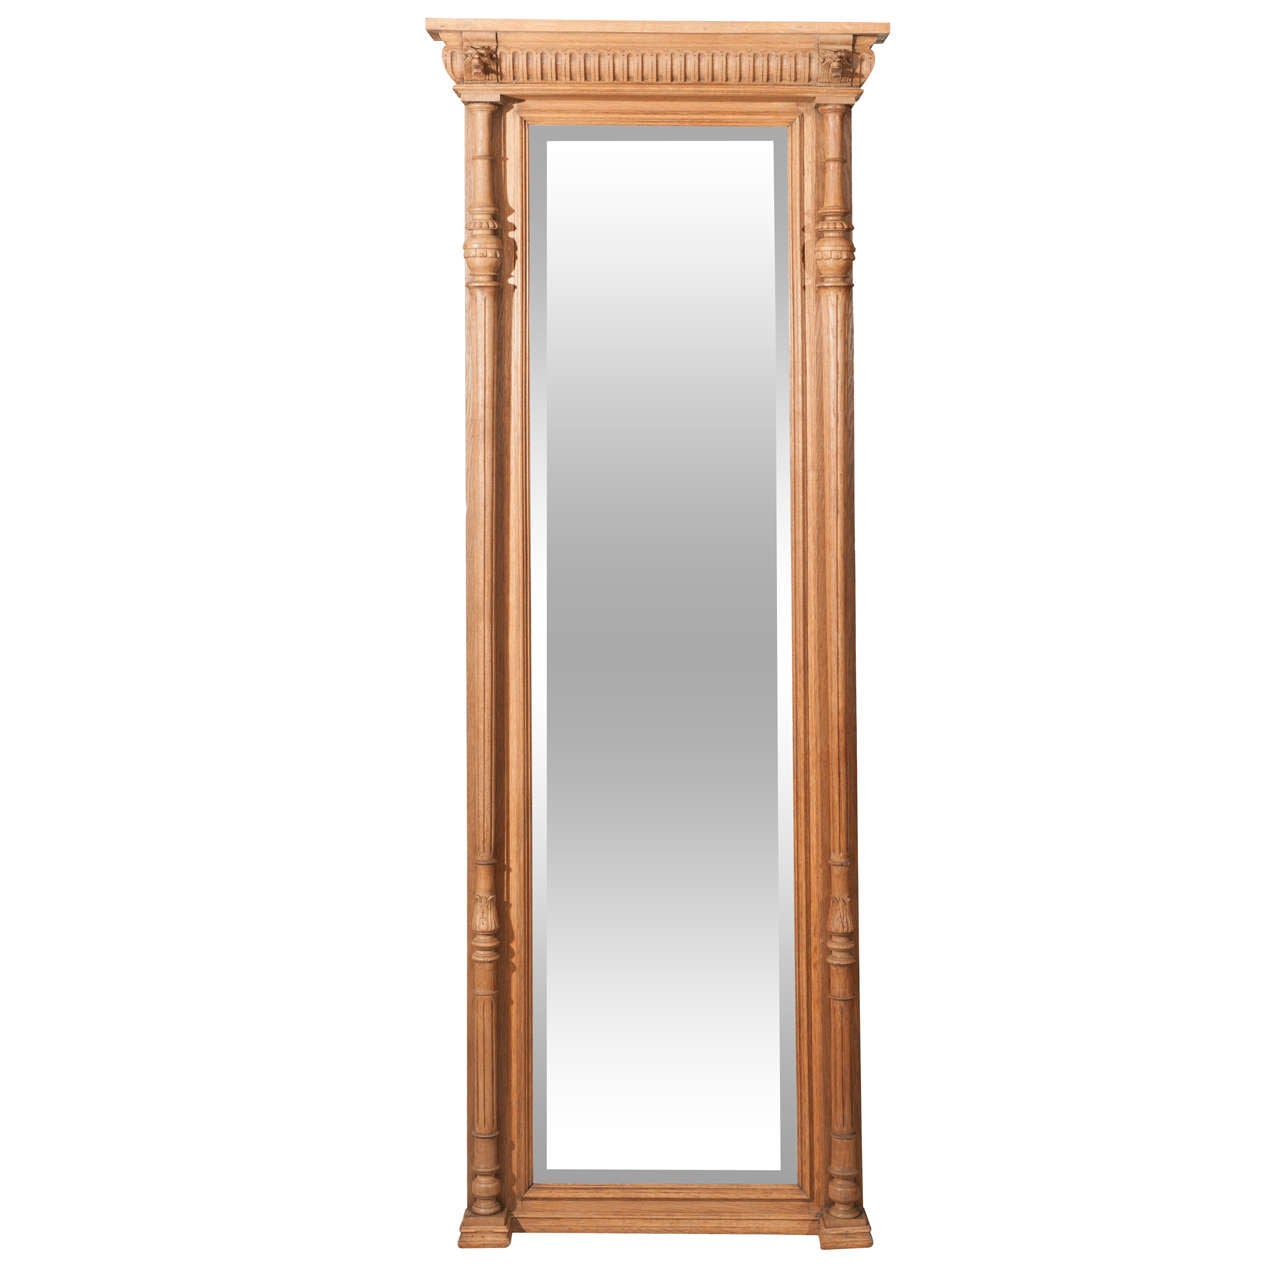 19th century Flemish hall mirror For Sale